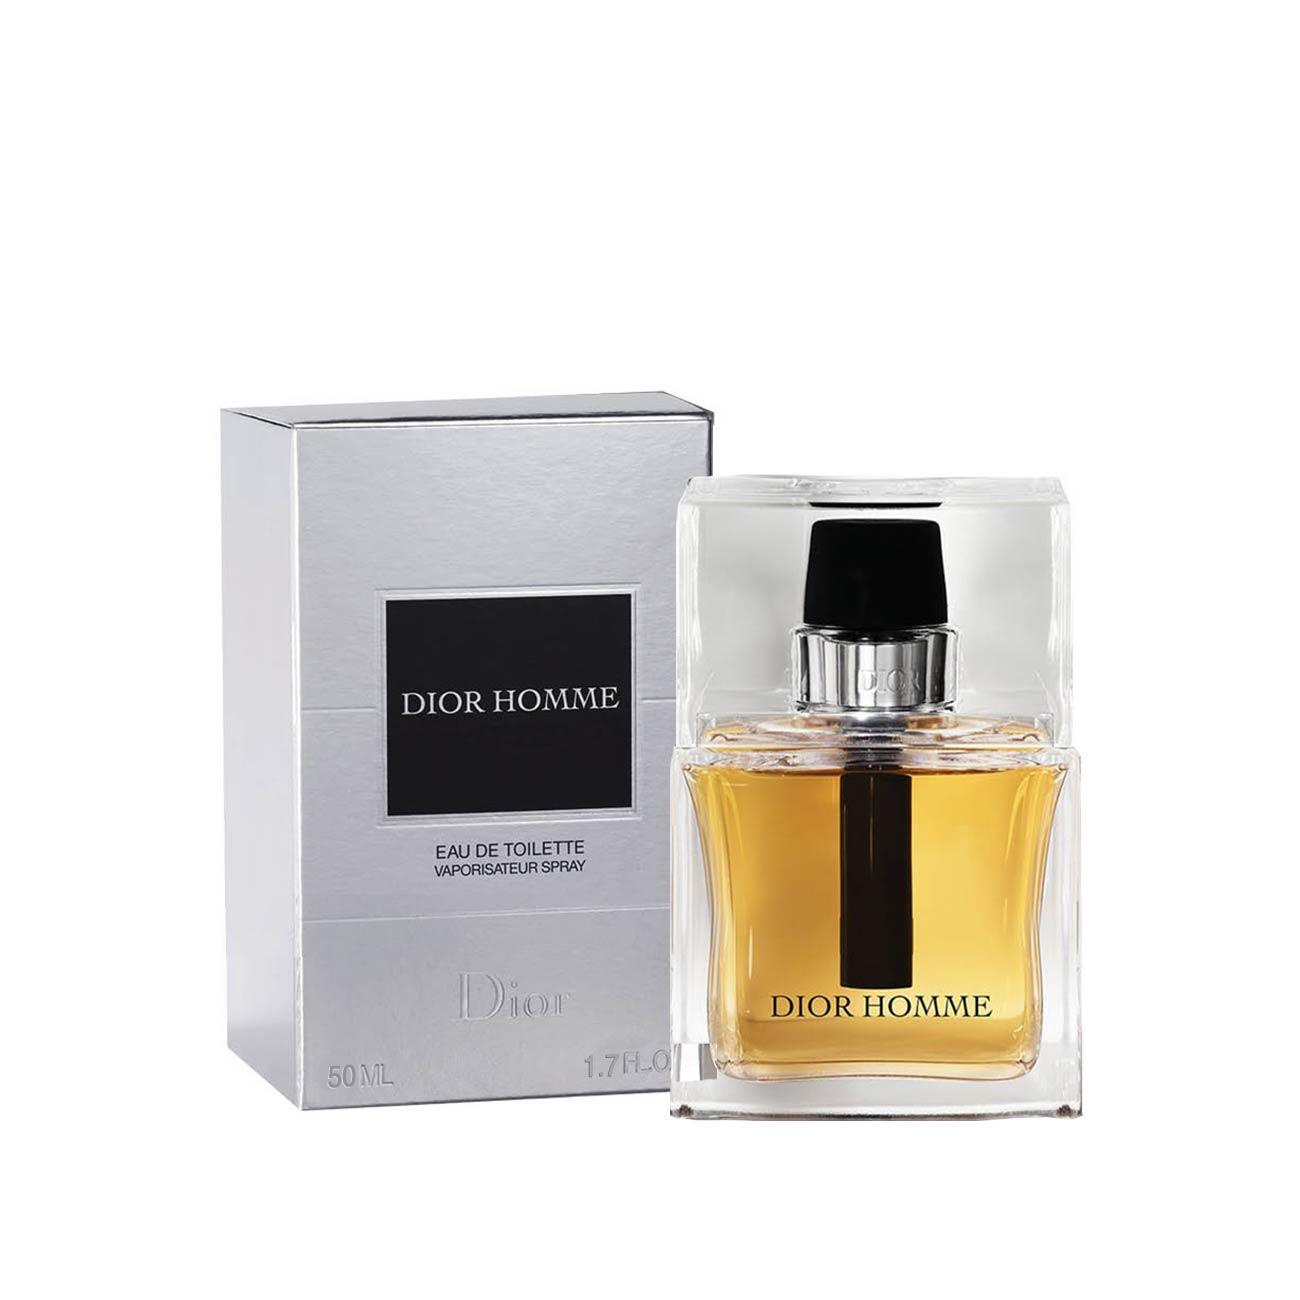 DIOR HOMME ORIGINAL Eau de Toilette Spray  Dior Homme  Man Perfumes   Parfumdocom